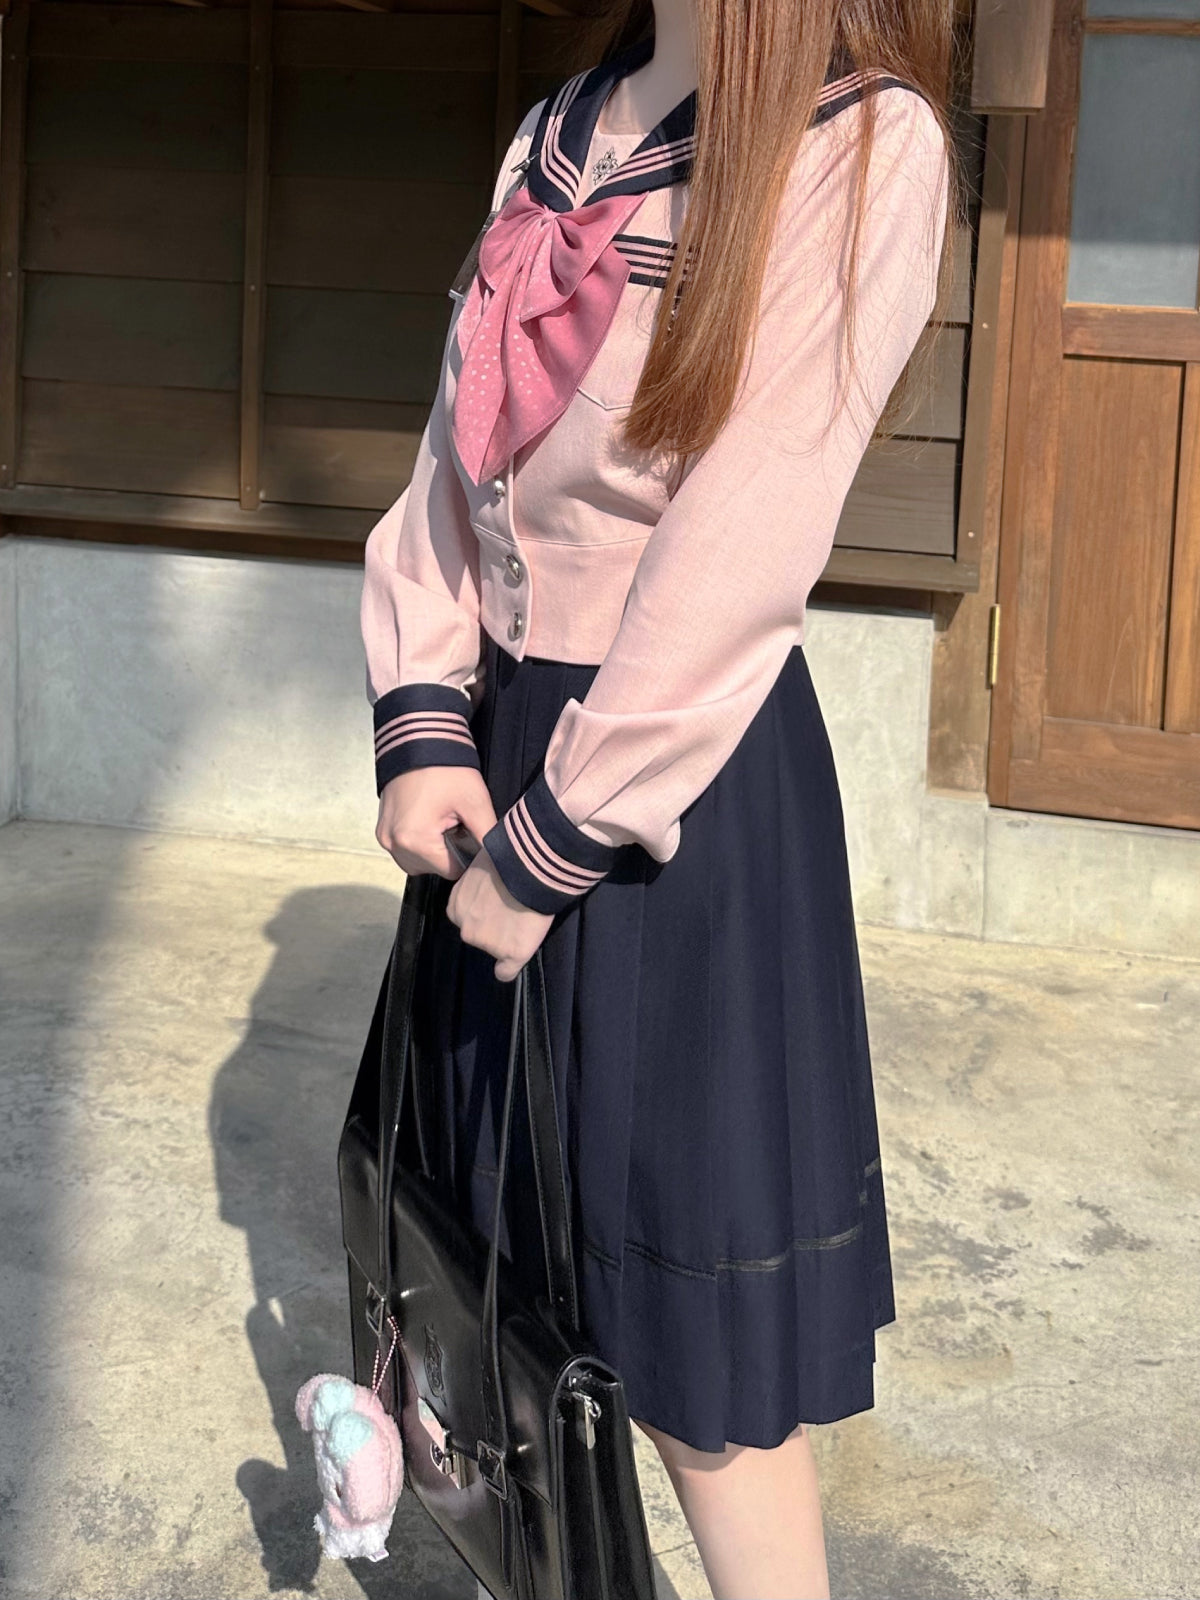 Sakura Petals Japanese Sailor Collar Long-sleeved JK Uniform Blouse-ntbhshop